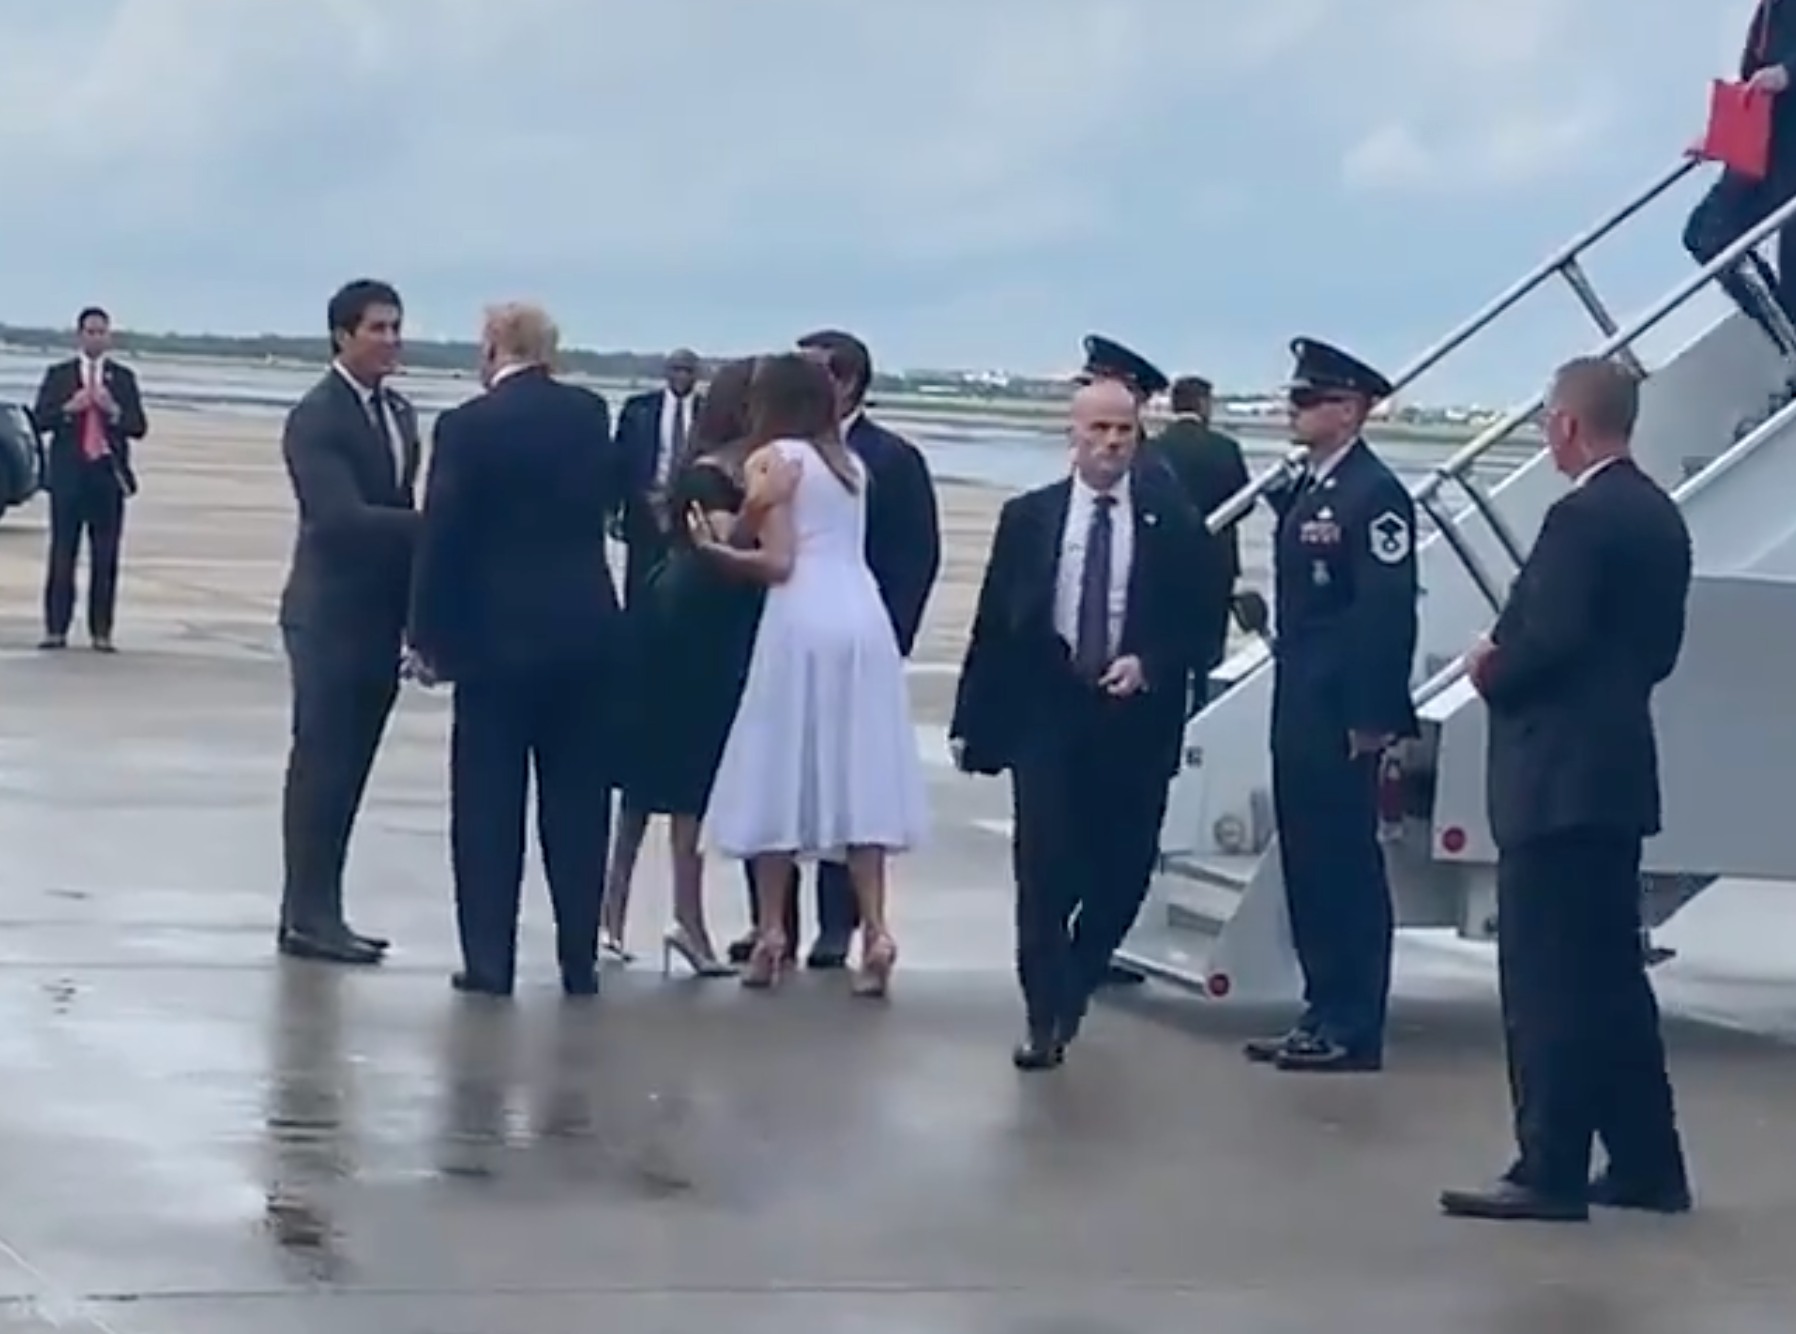 Donald and Melania Trump meet Jason Pirozzolo at an Orlando airport in 2019